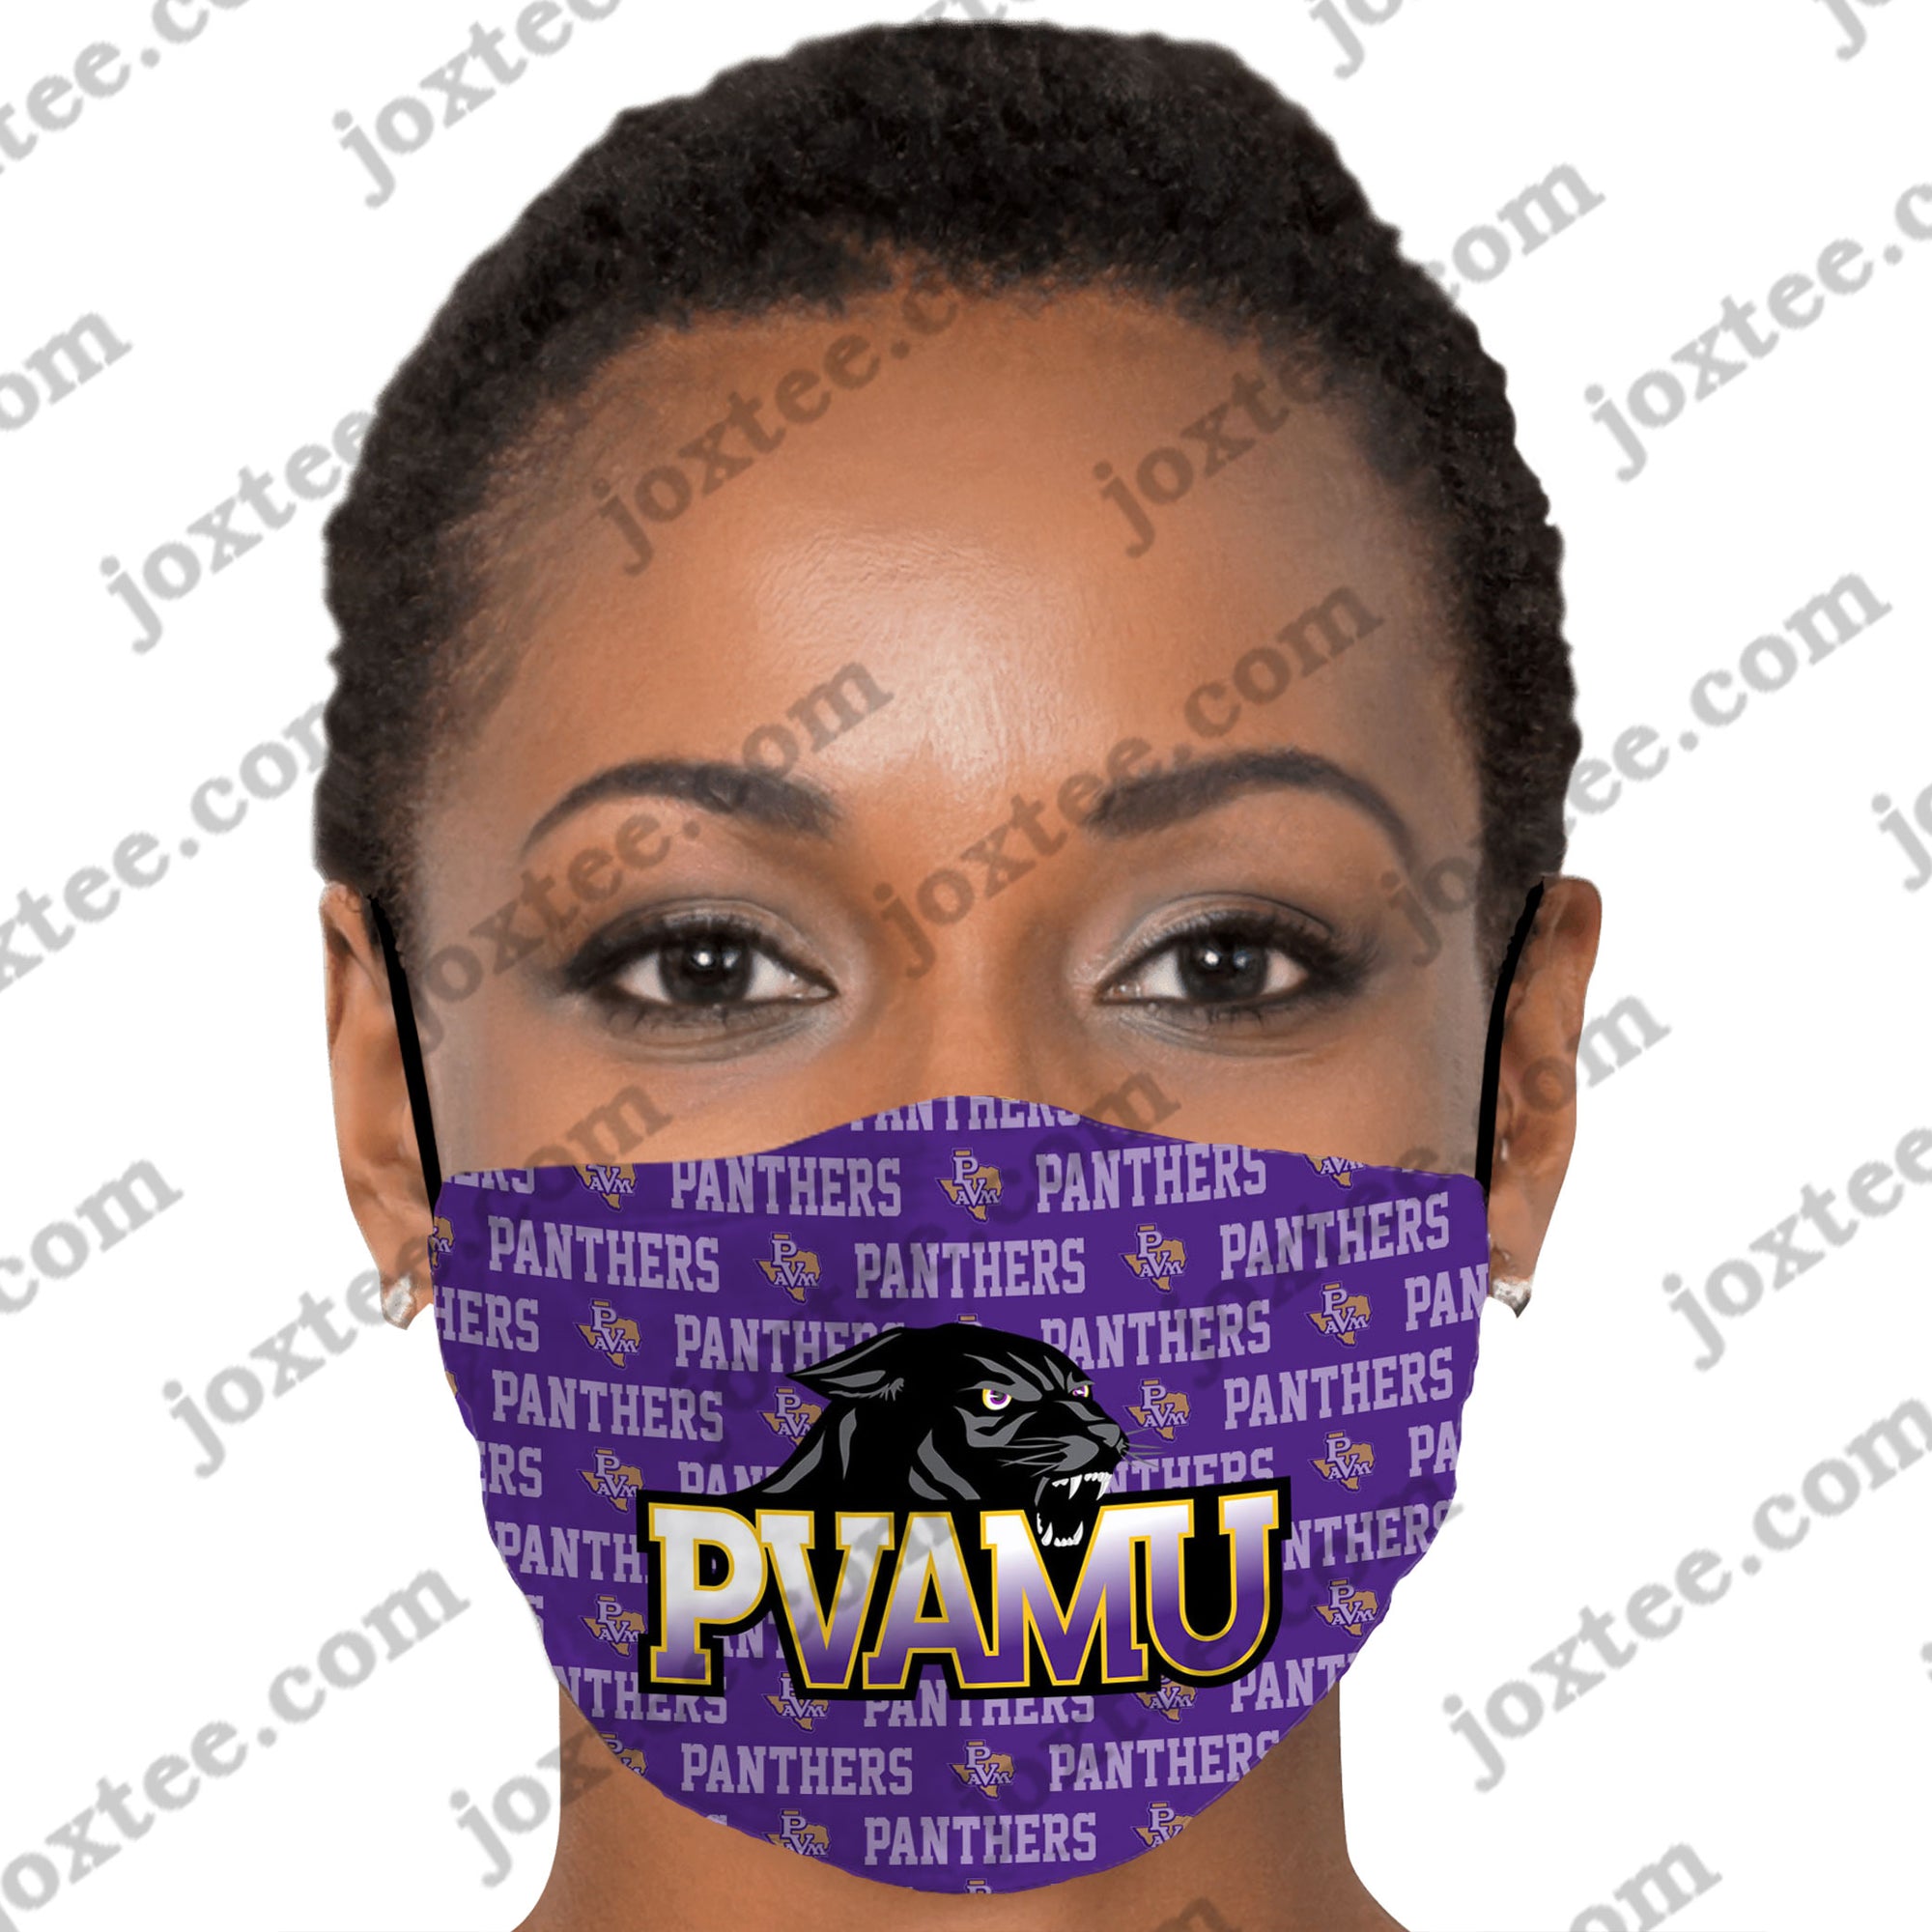 Pvamu Panthers Fashion Mask 3D v313